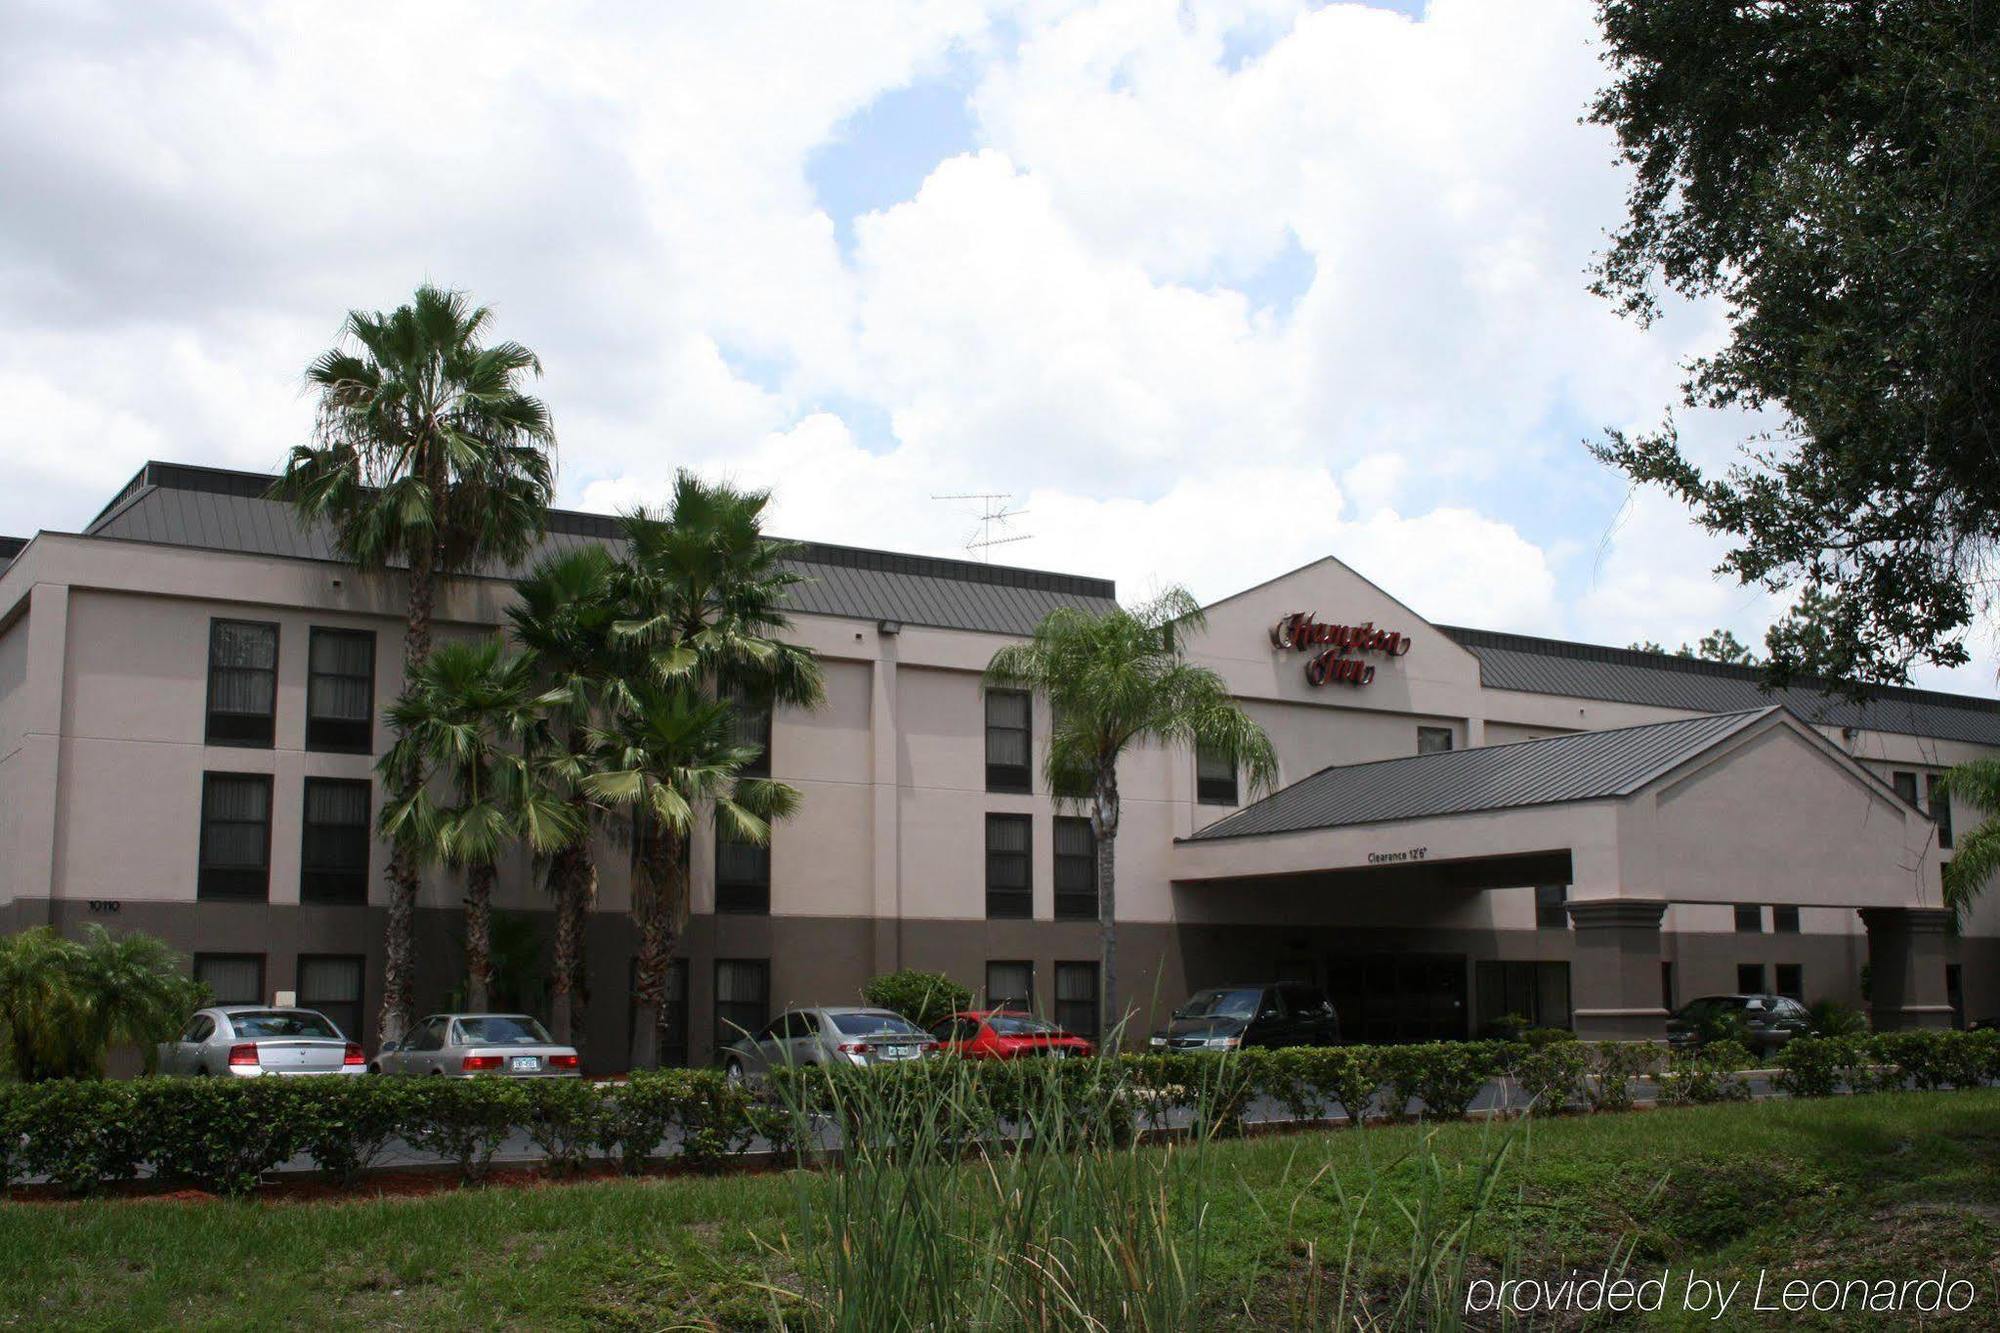 Brandon Center Hotel Tampa Exterior photo